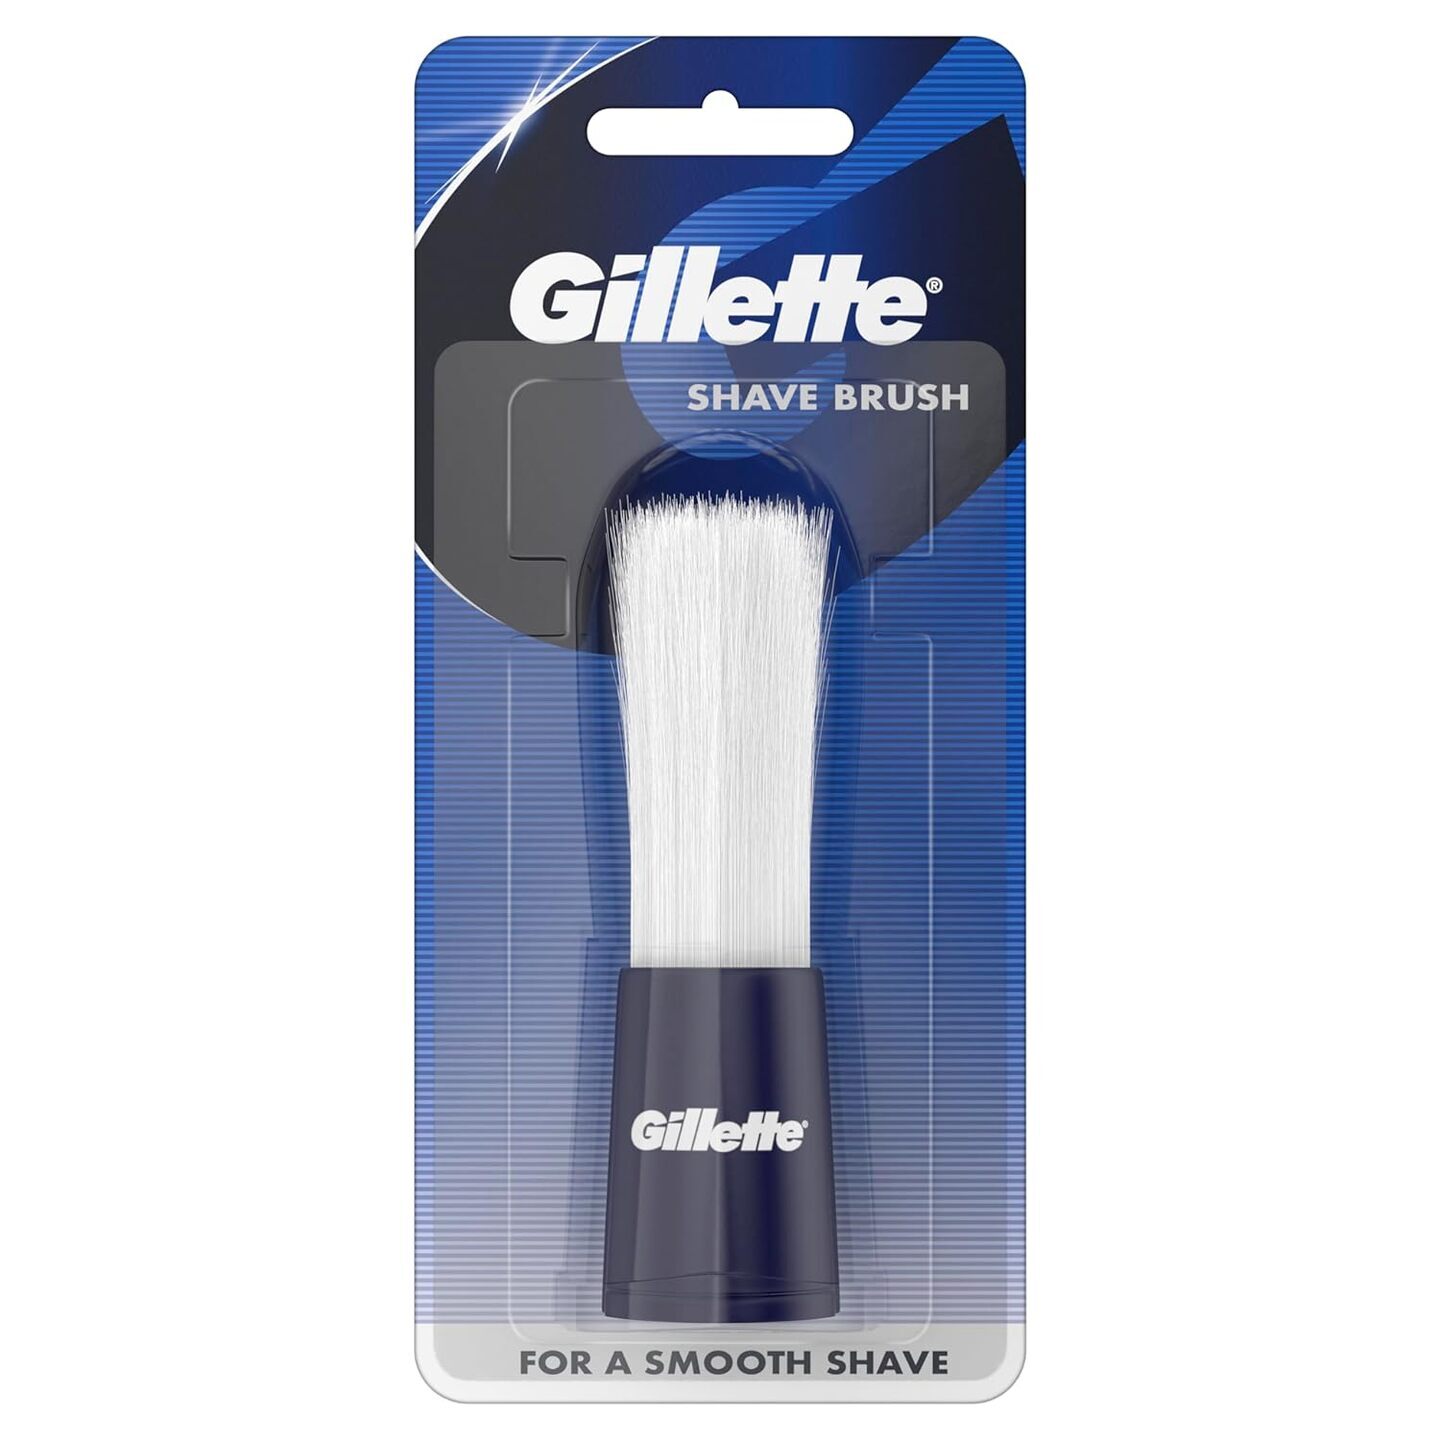 Gillette Shaving Brush for a smooth shave